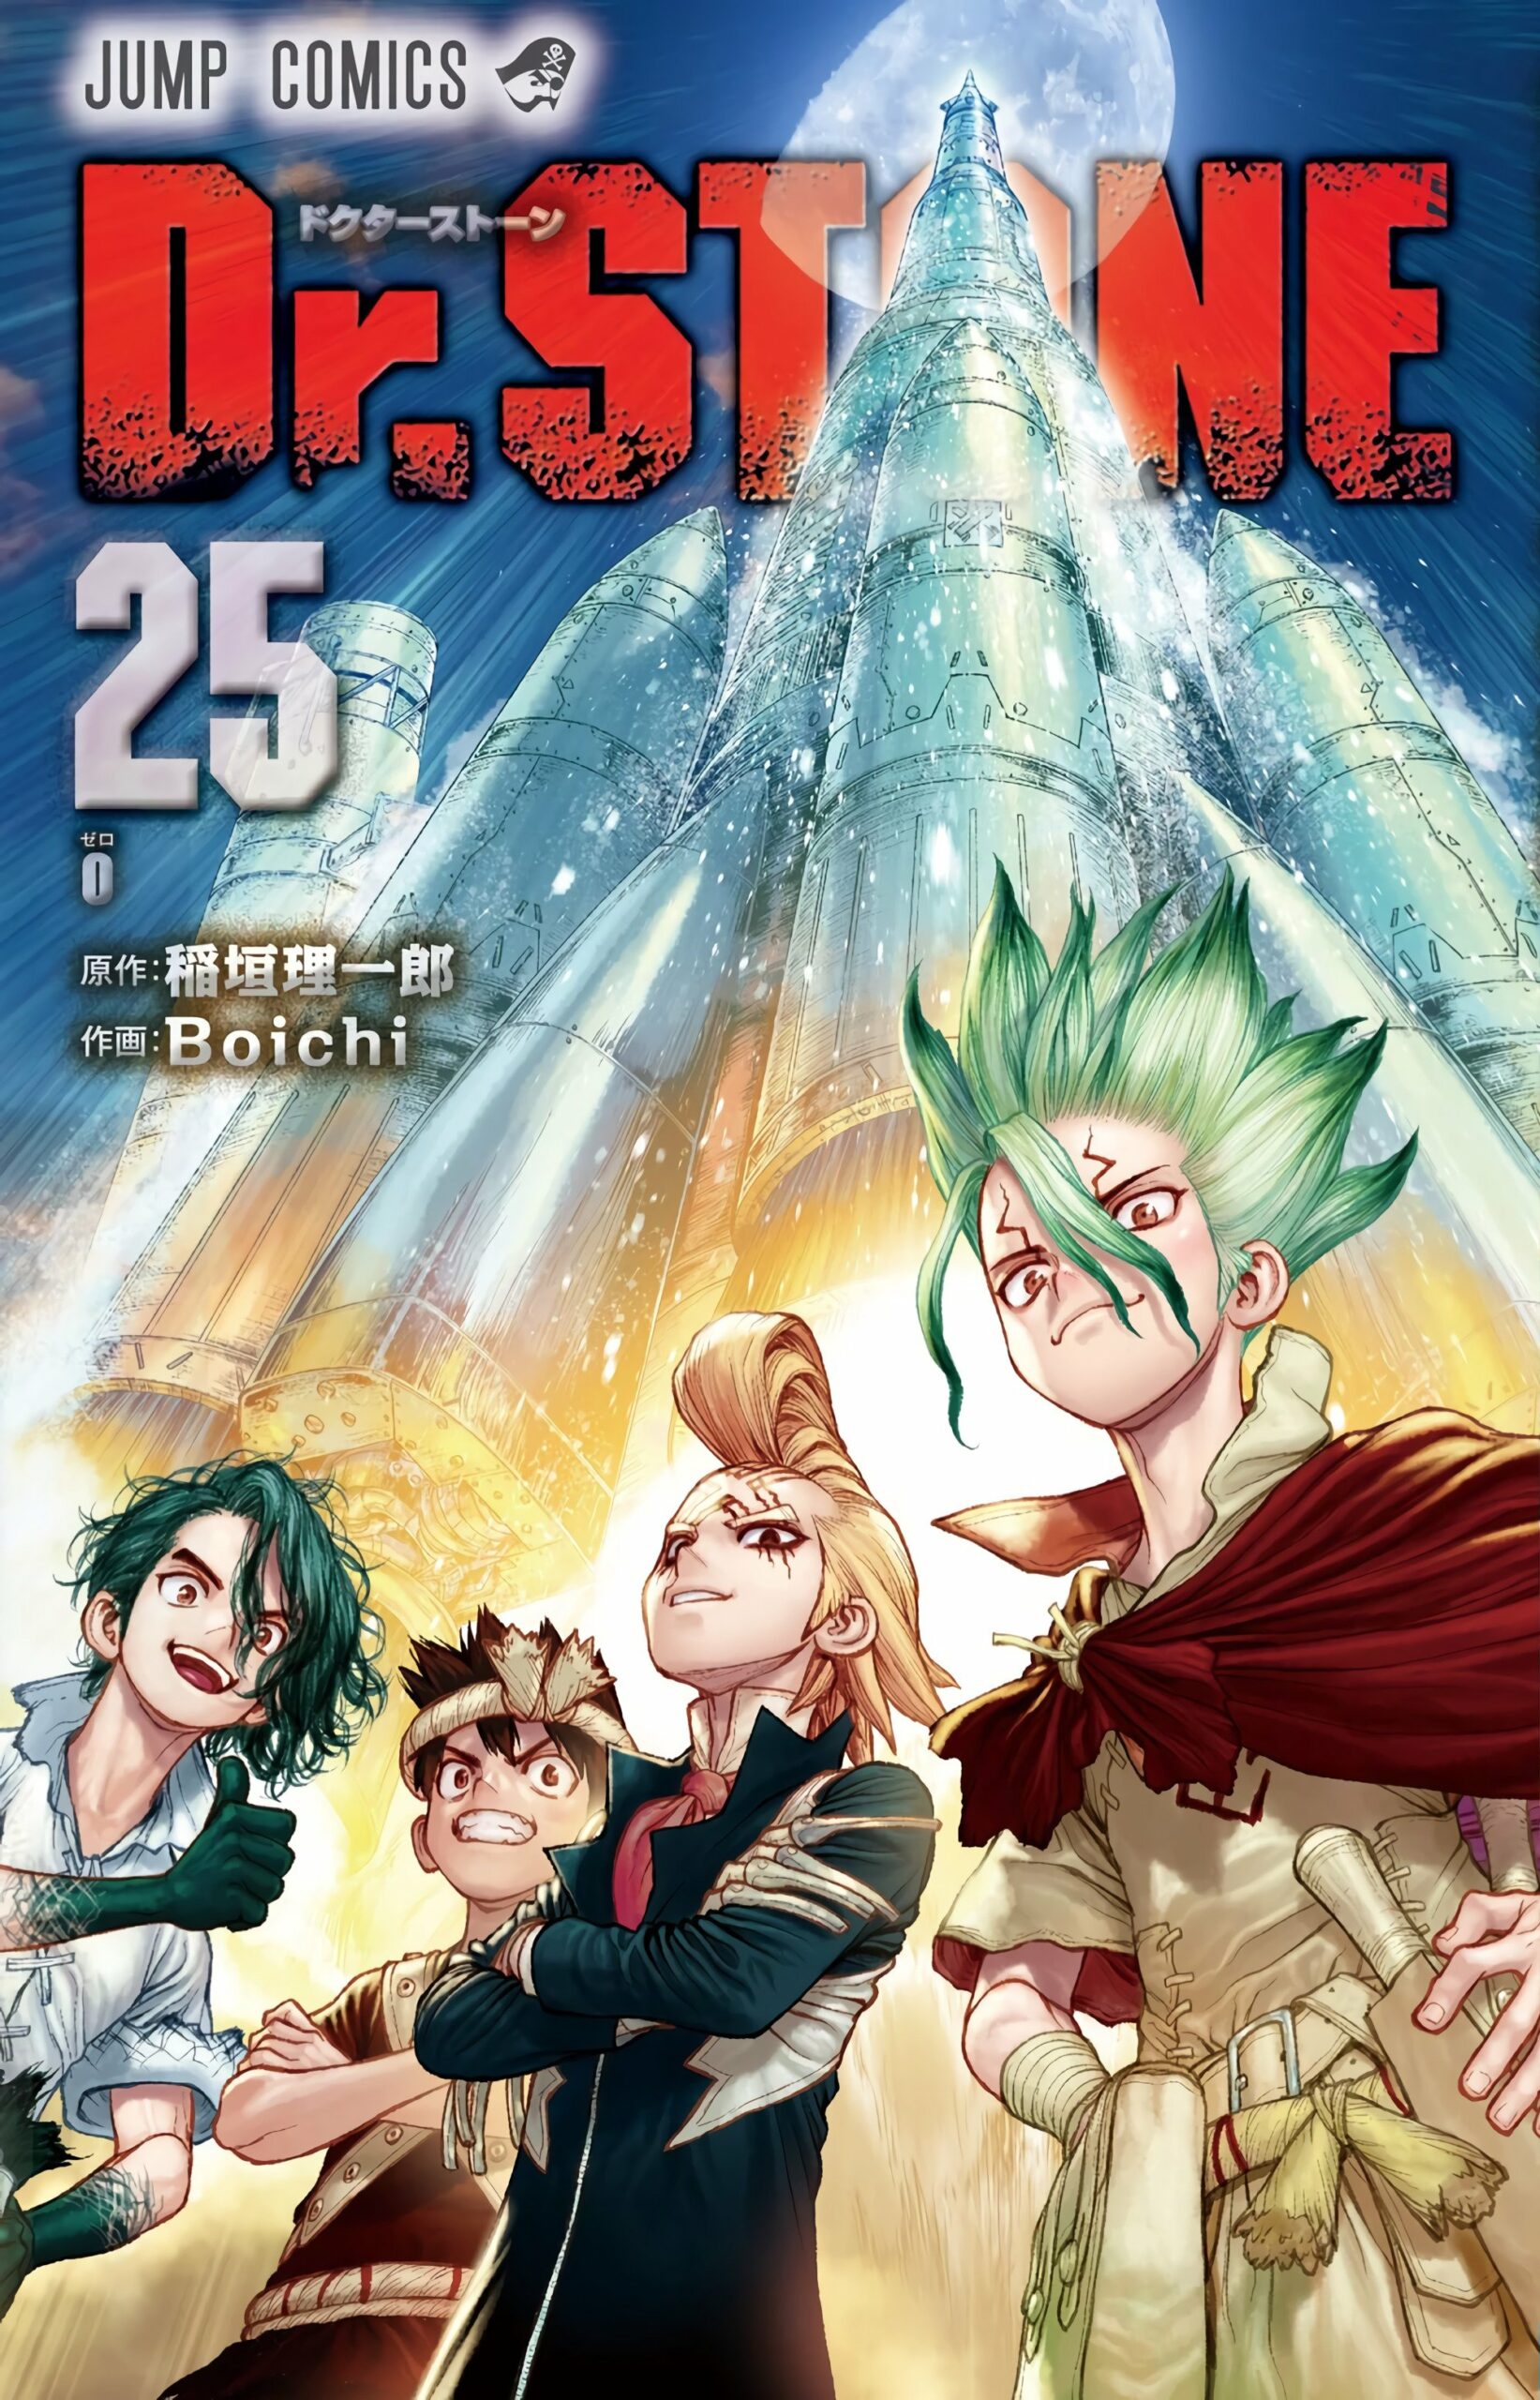 Dr. STONE manga volume 25